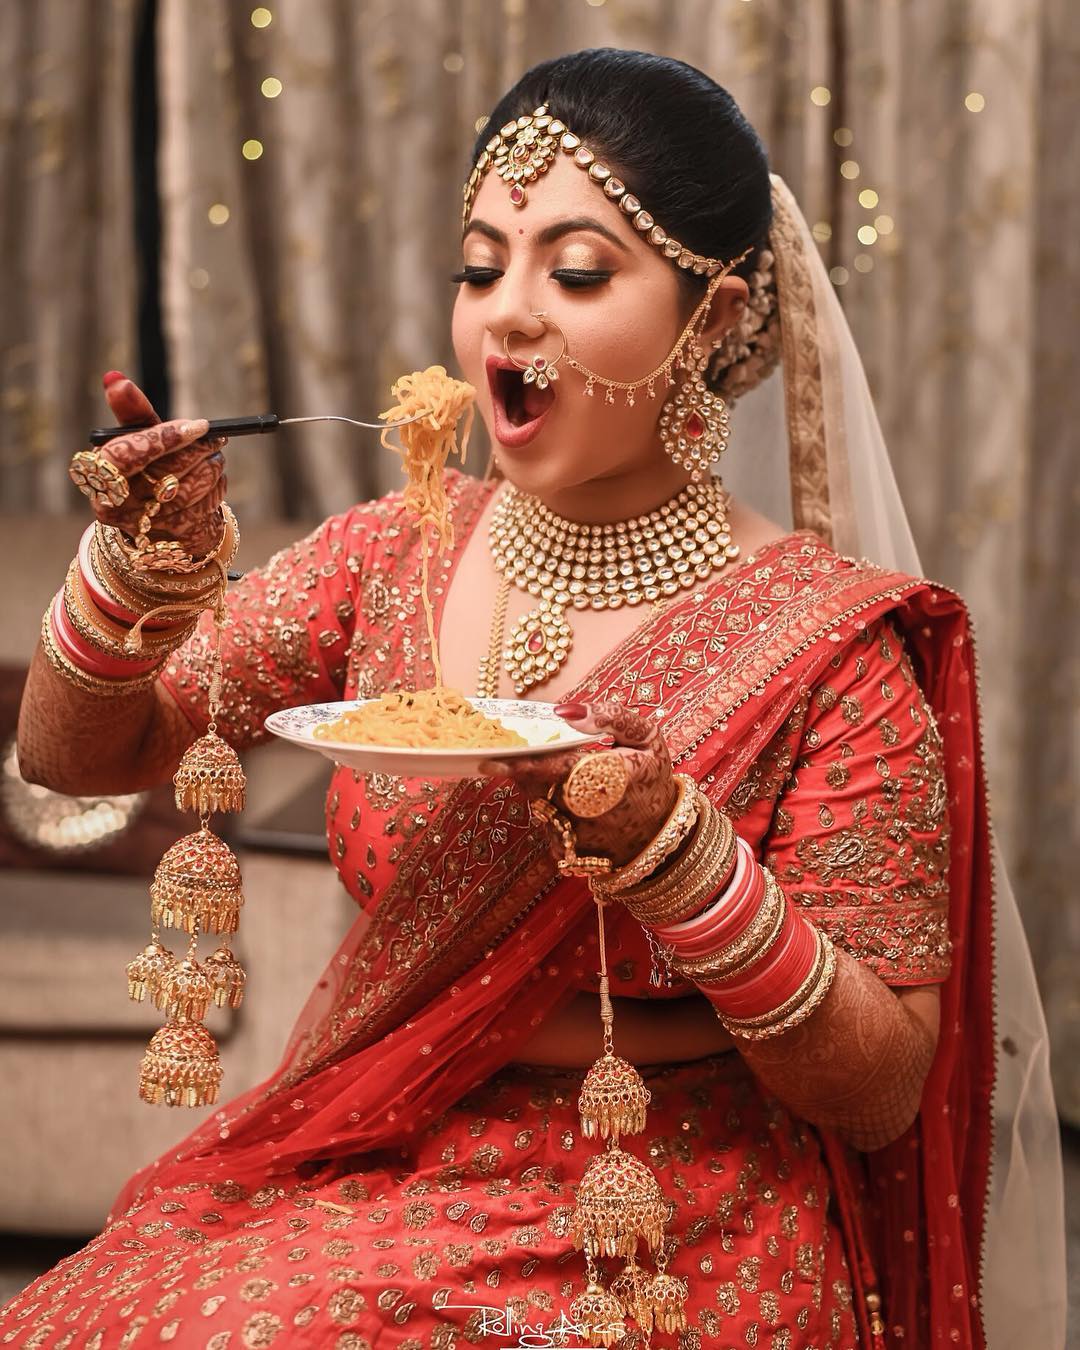 solo bridal photoshoot poses with food - bridal photoshoot ideas 